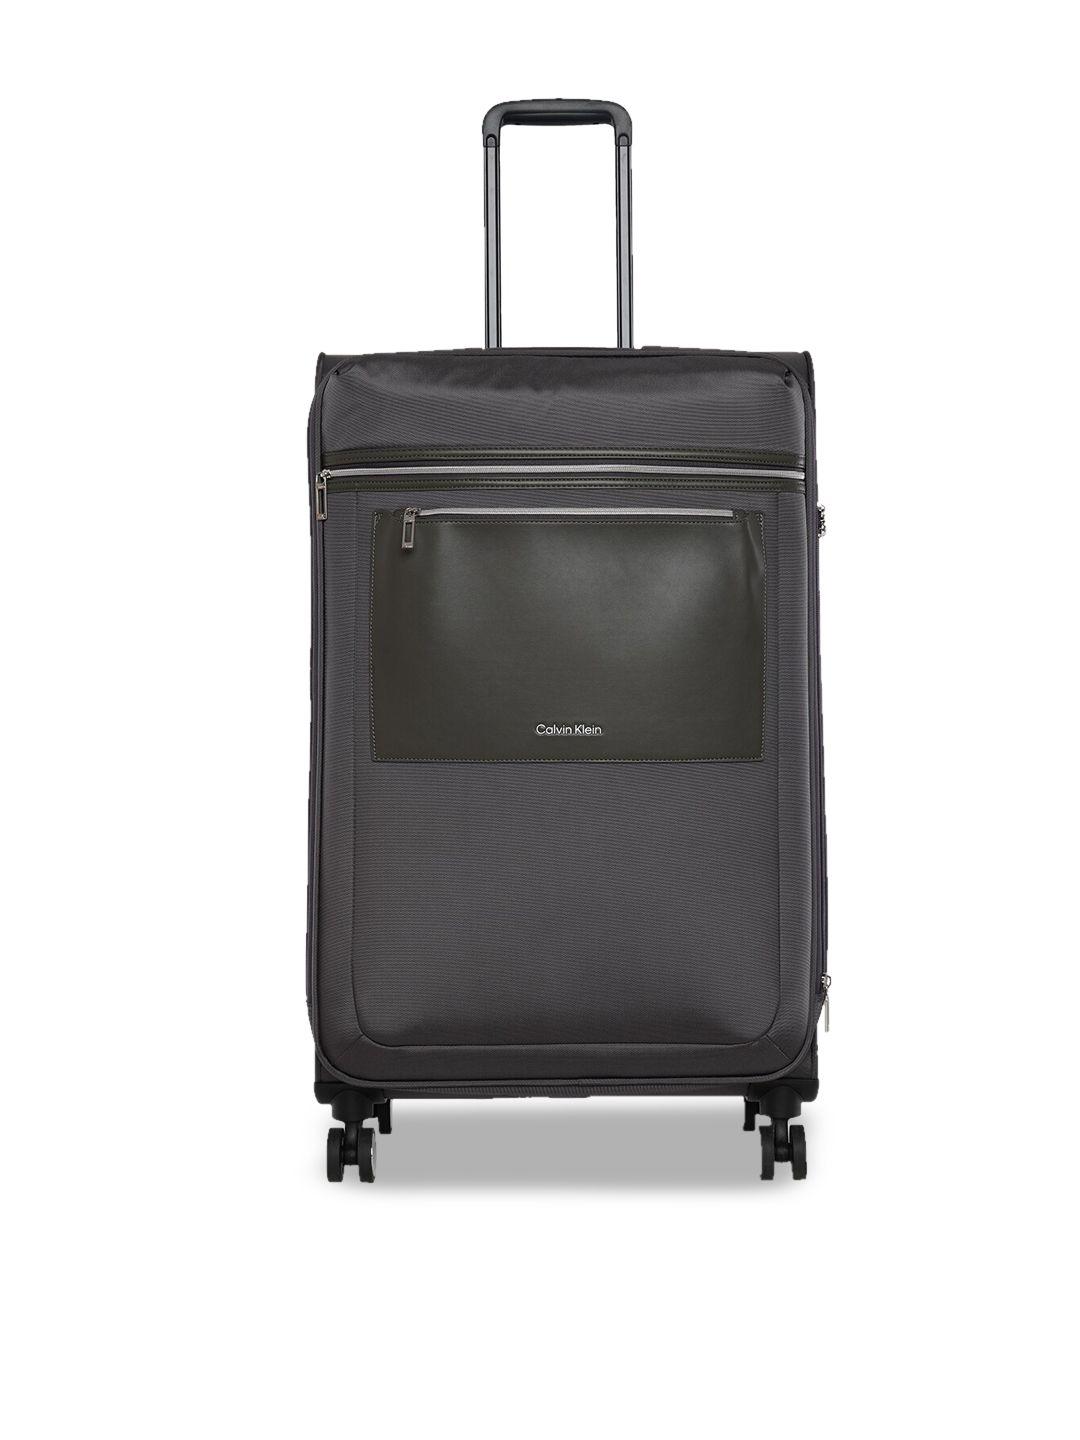 calvin klein union square range dark grey color soft case polyester large size luggage